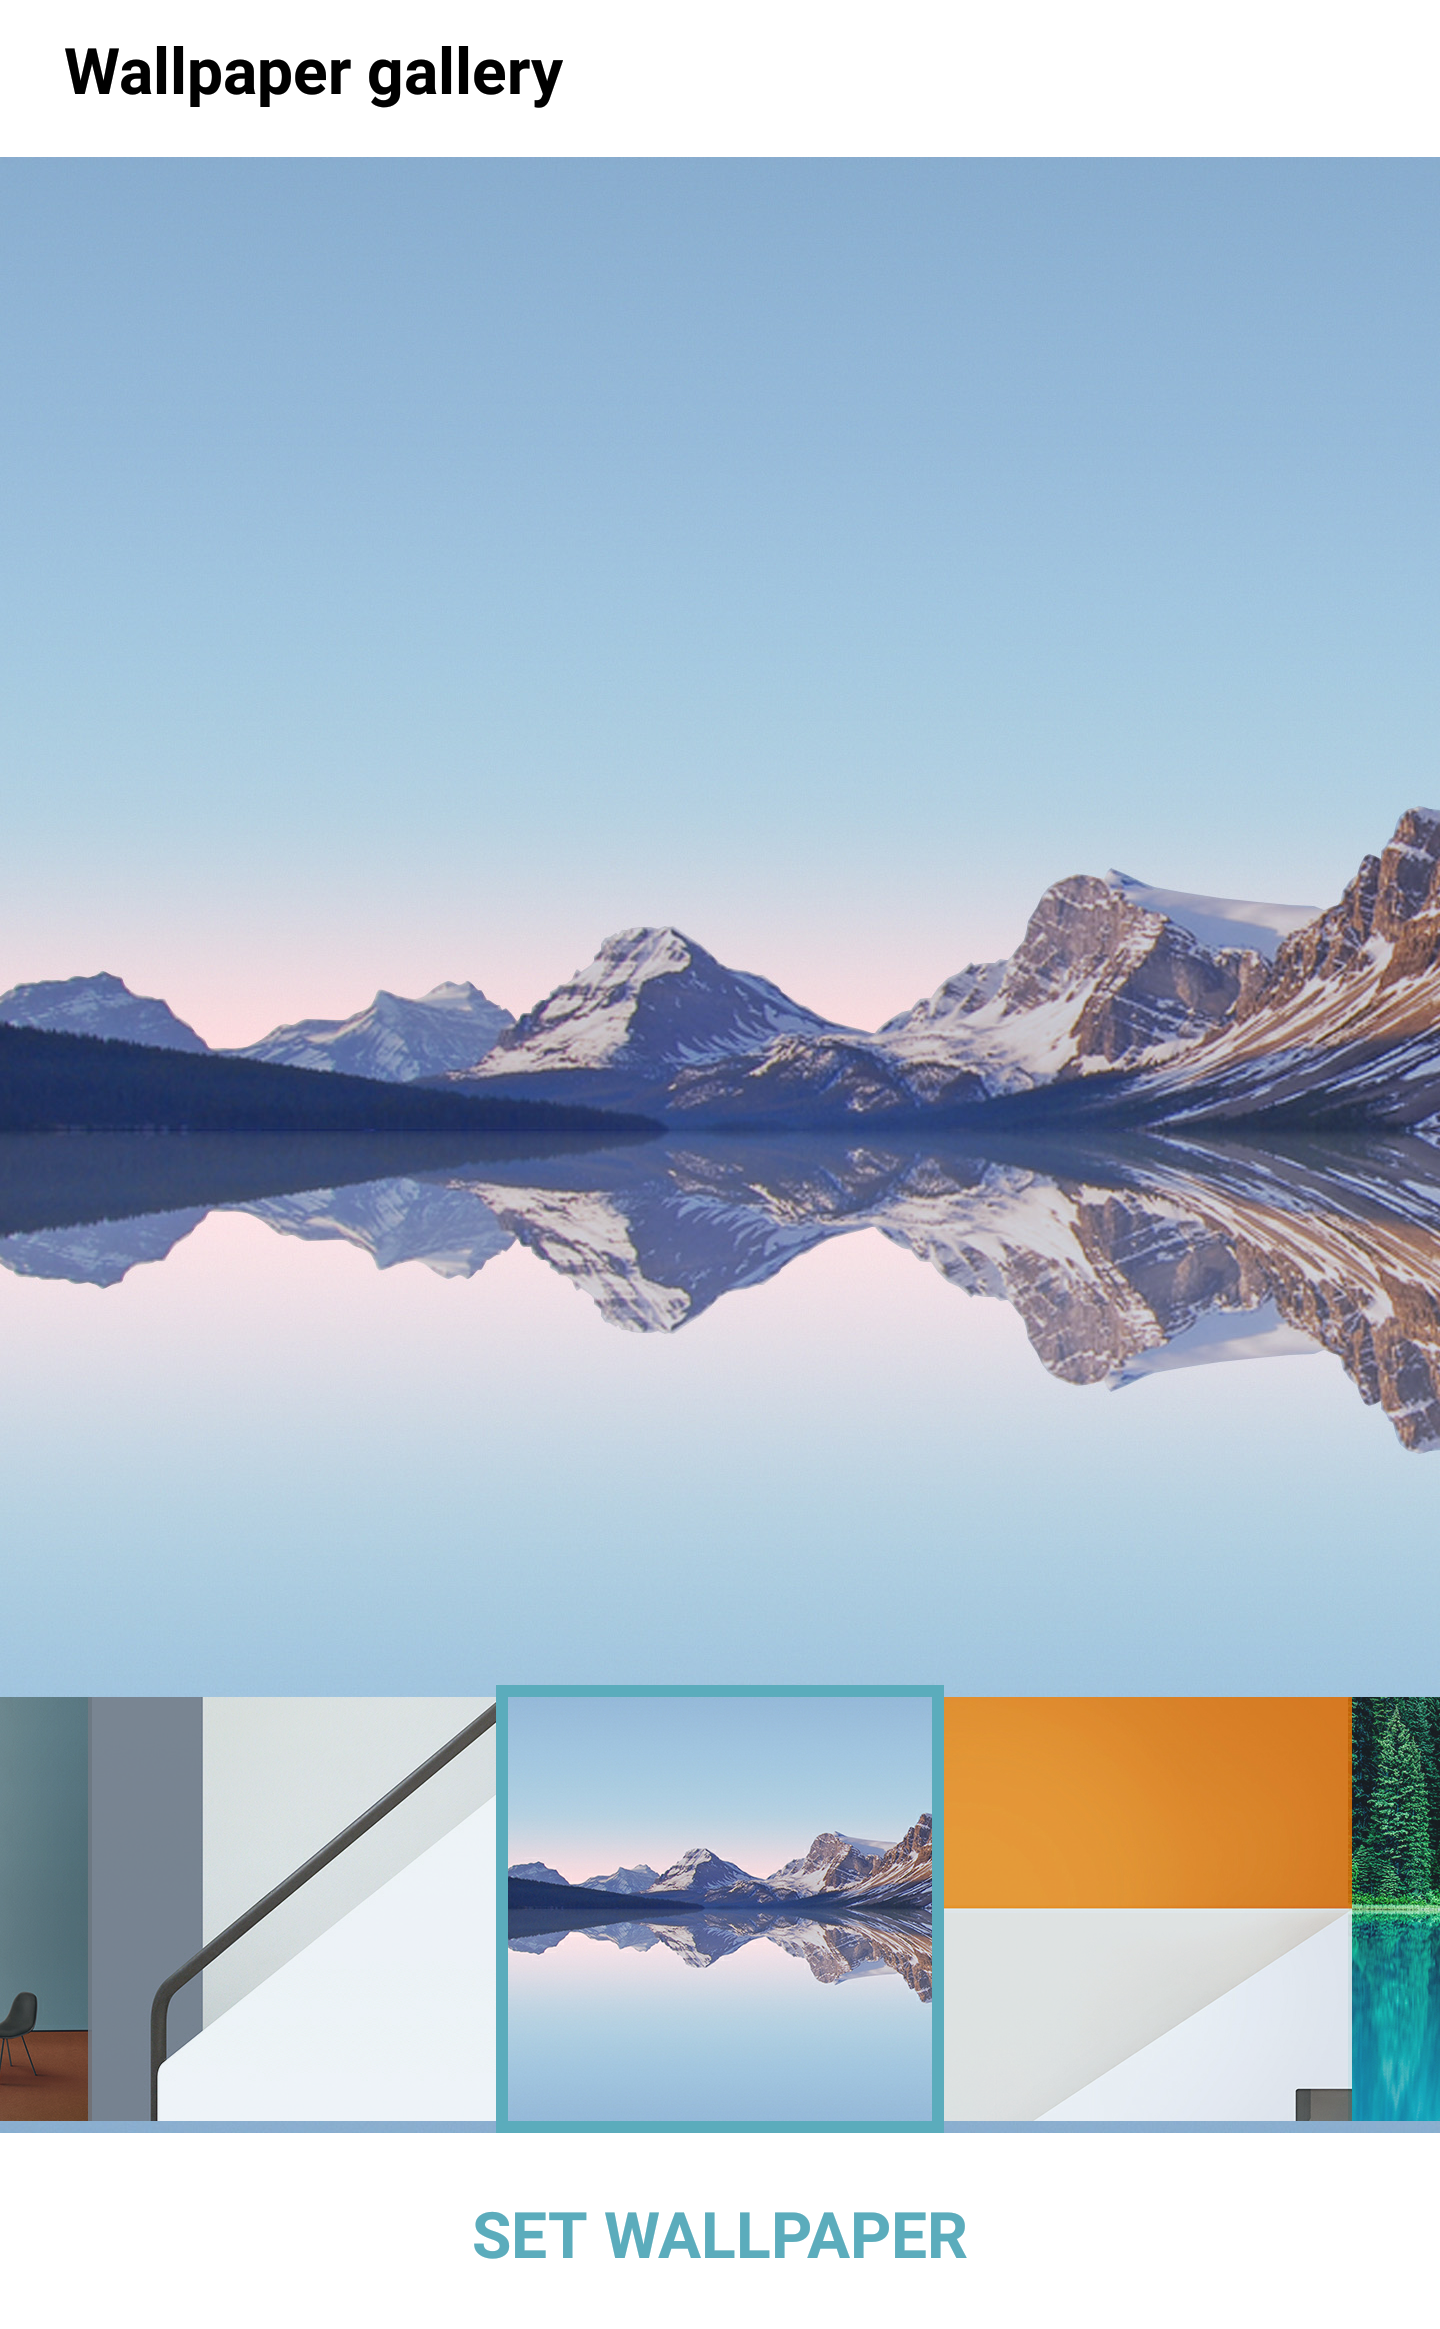 Set New Wallpaper - Android 7 Home Screen - HD Wallpaper 